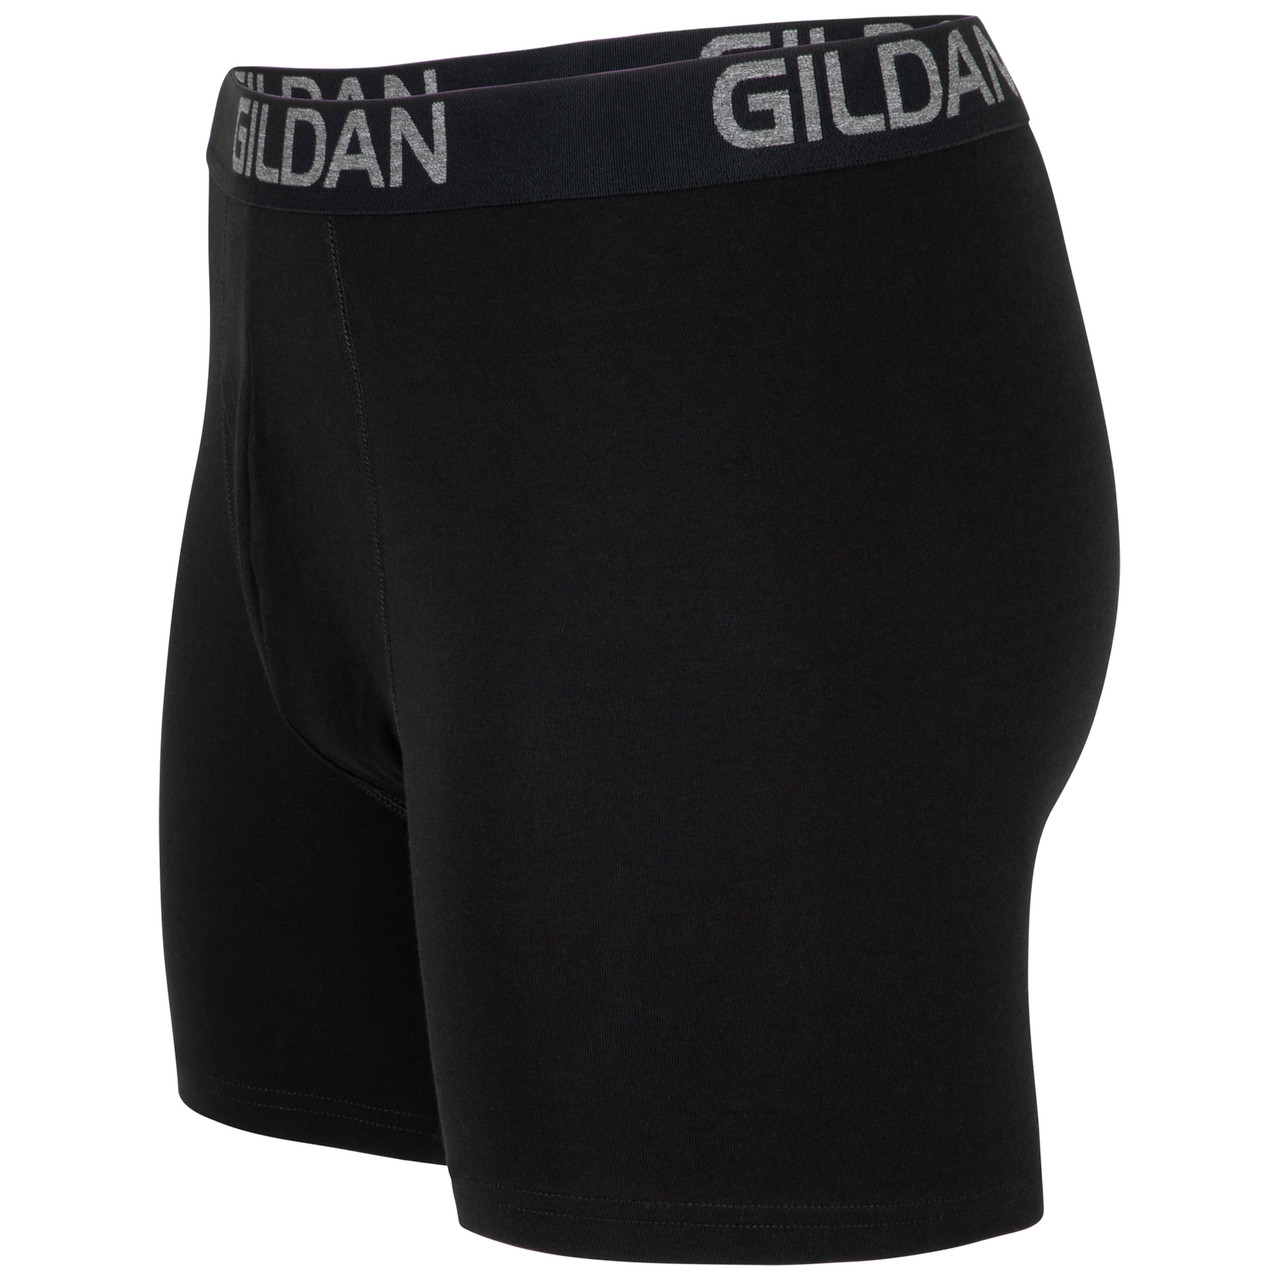 Gildan Adult Men's Performance Cotton Regular Leg Blue Boxer Briefs,  3-Pack, Sizes S-2XL